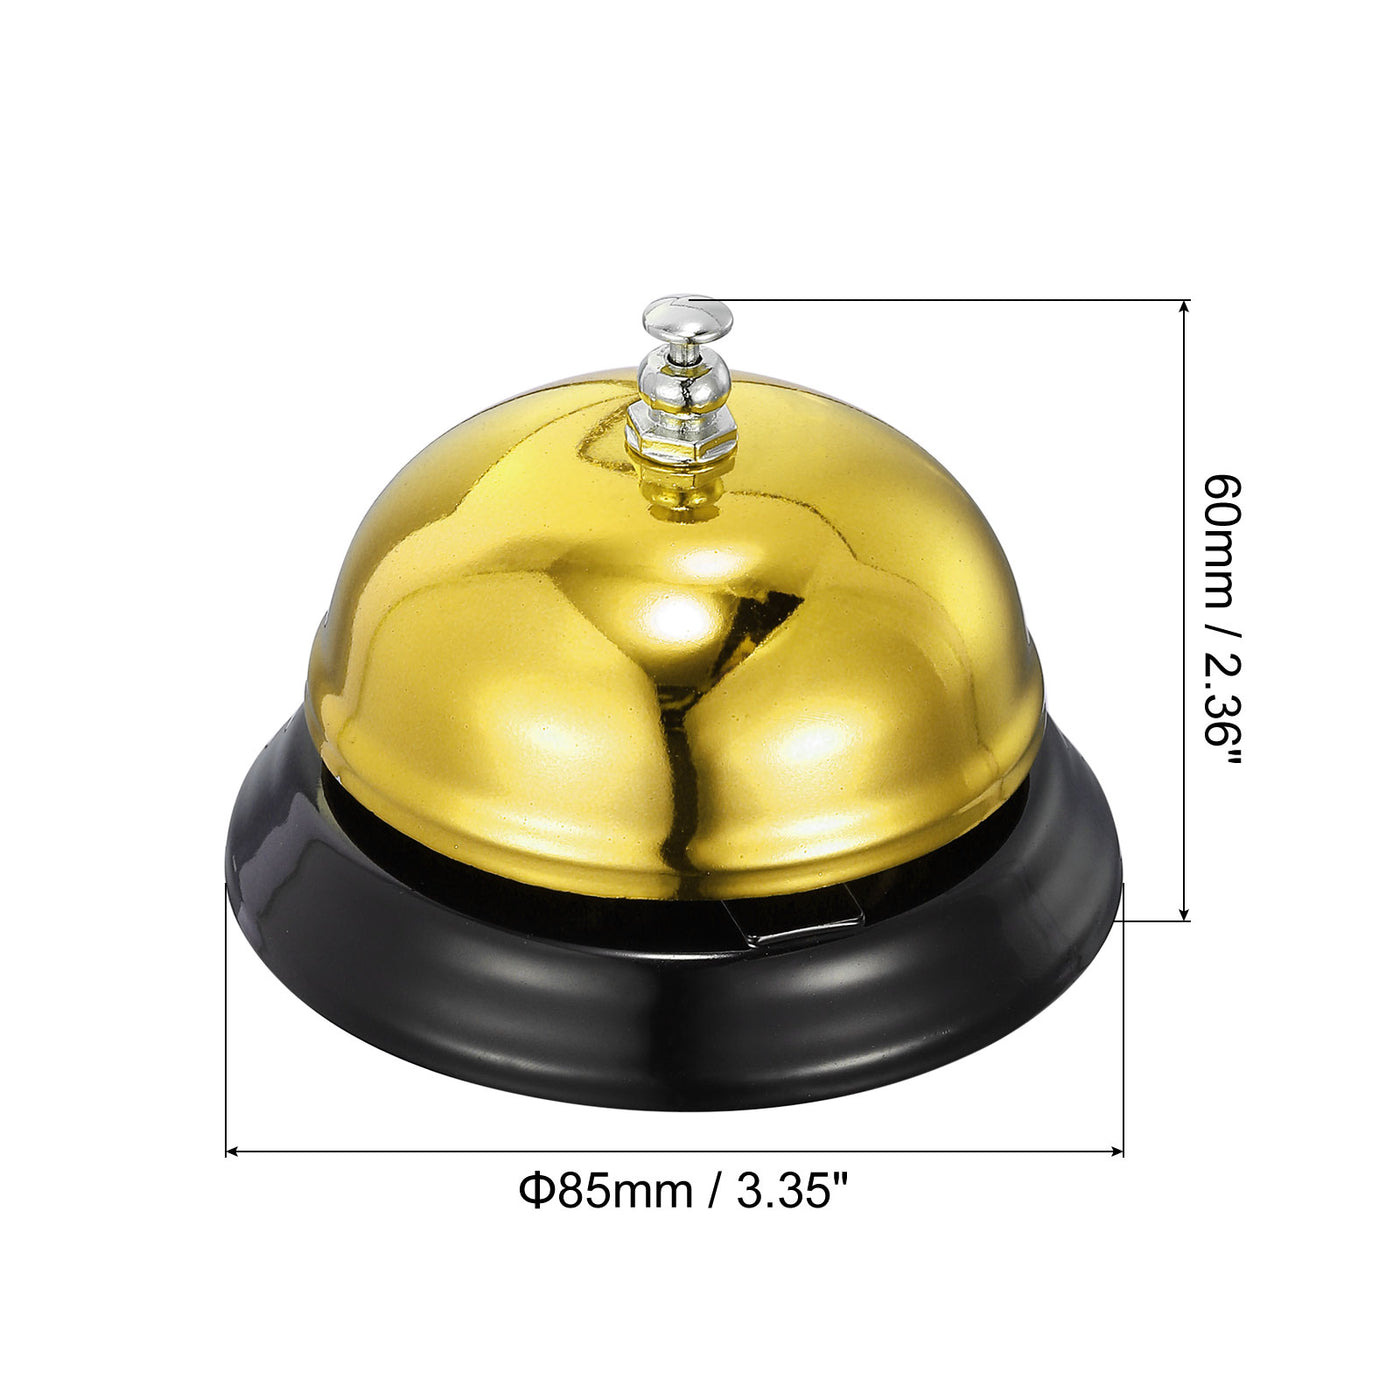 Uxcell Uxcell Desk Bell, 85mm(3.35") Dinner Bell for Restaurants, Service, Gold Tone